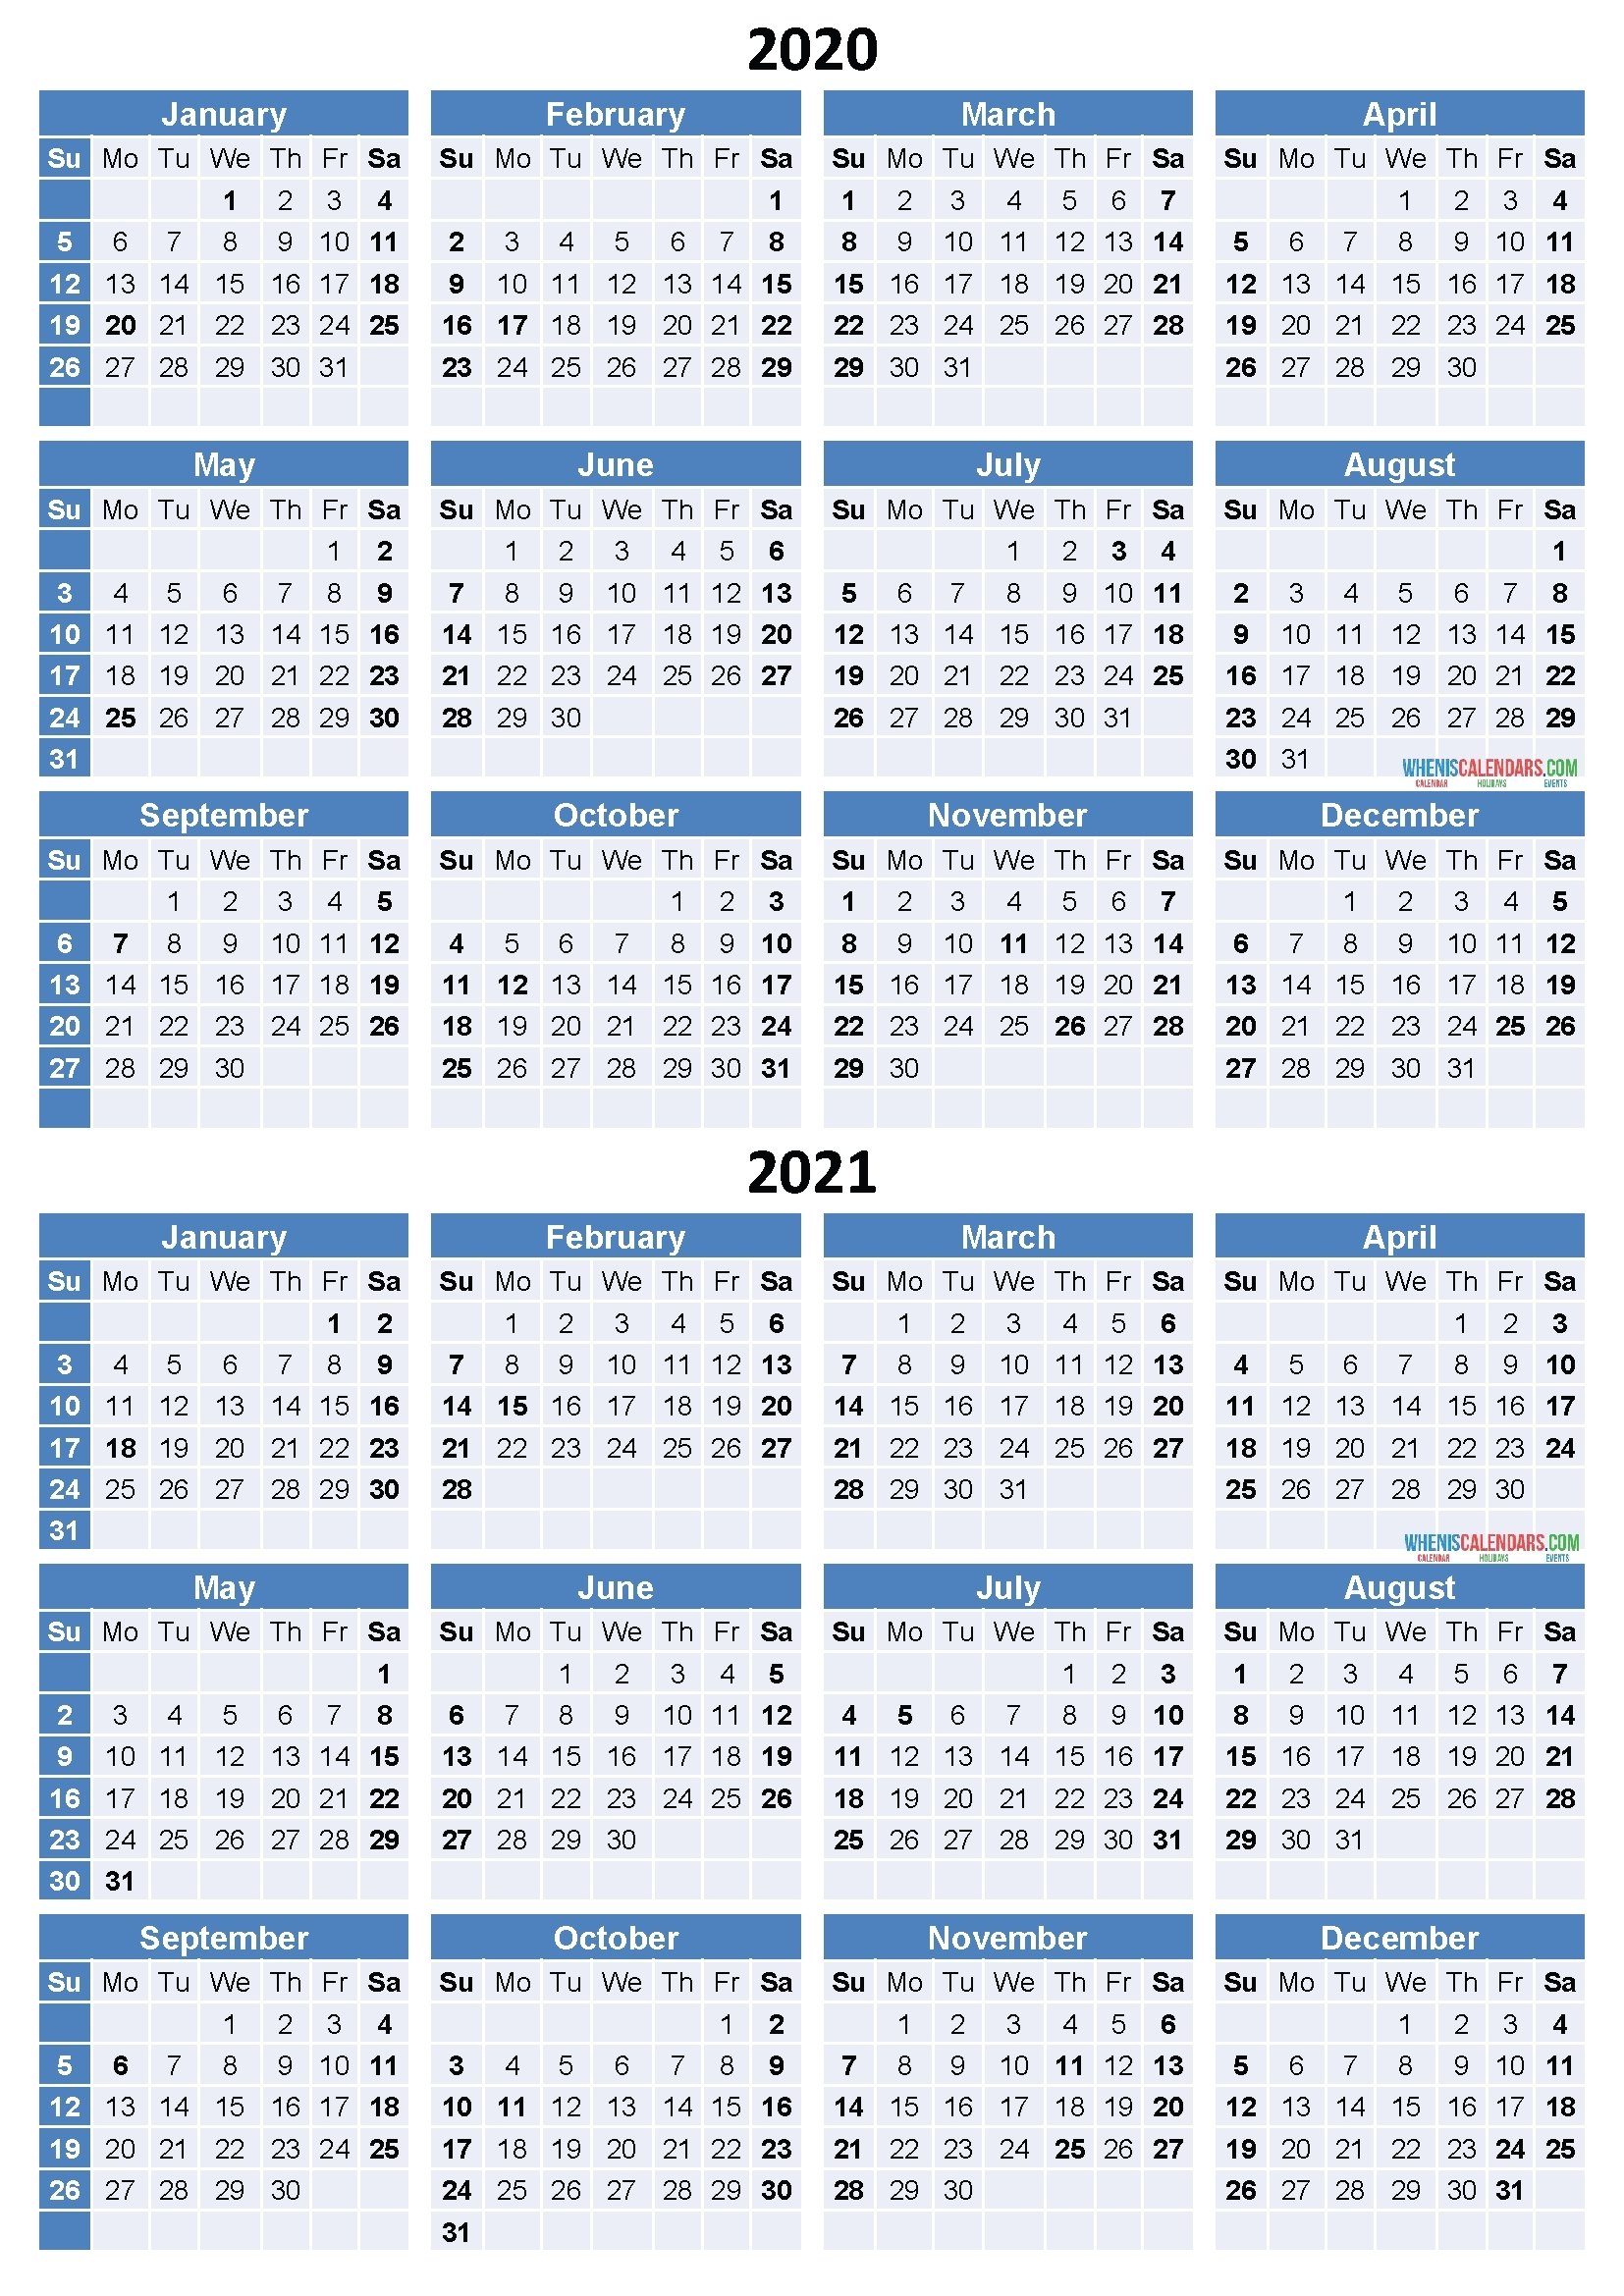 Depo Provera Calendar 2021 Printable | Printable Calendar pertaining to Depo Provera Calendar 2021